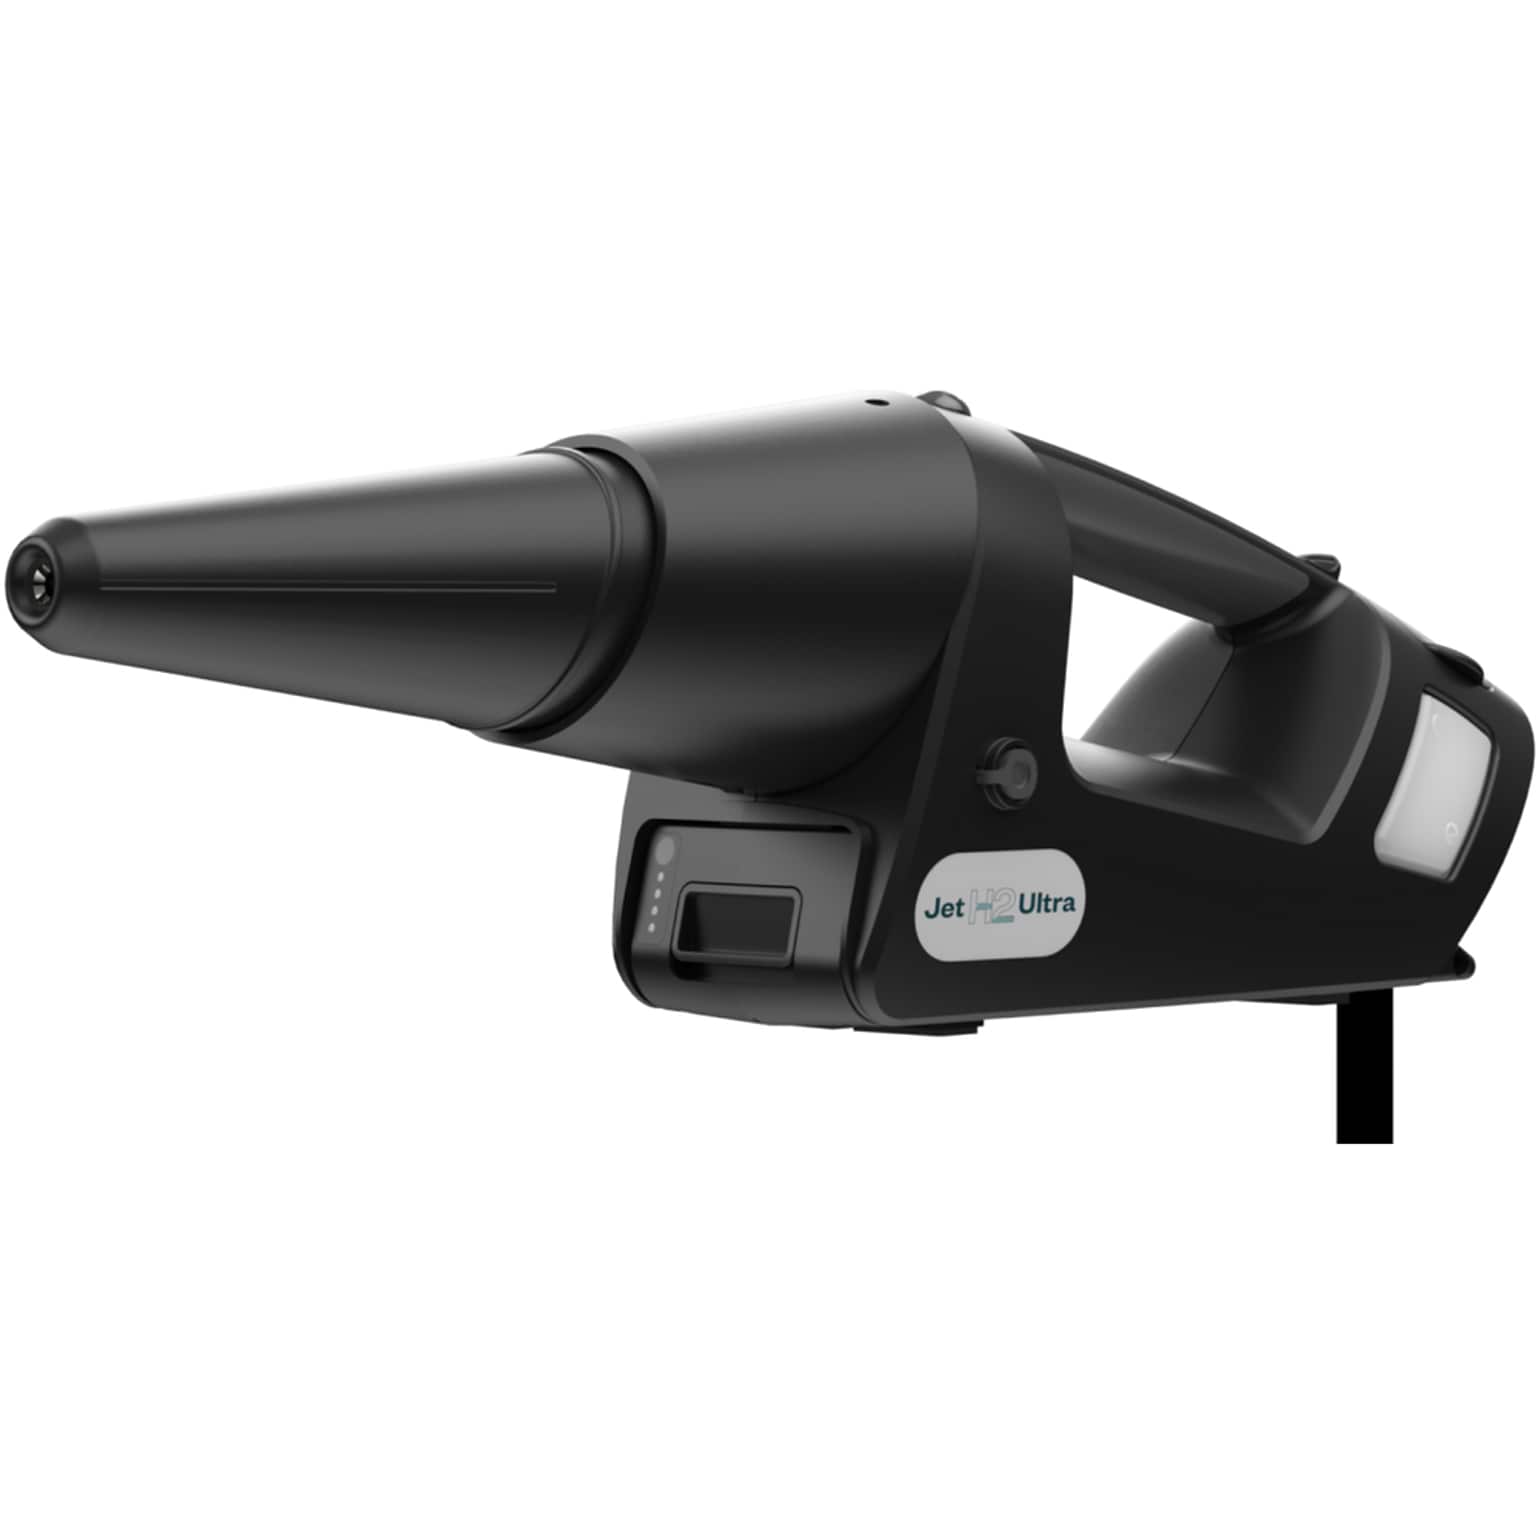 ByoPlanet Jet H2 Ultra Handheld Electrostatic Sprayer, Black (100157)